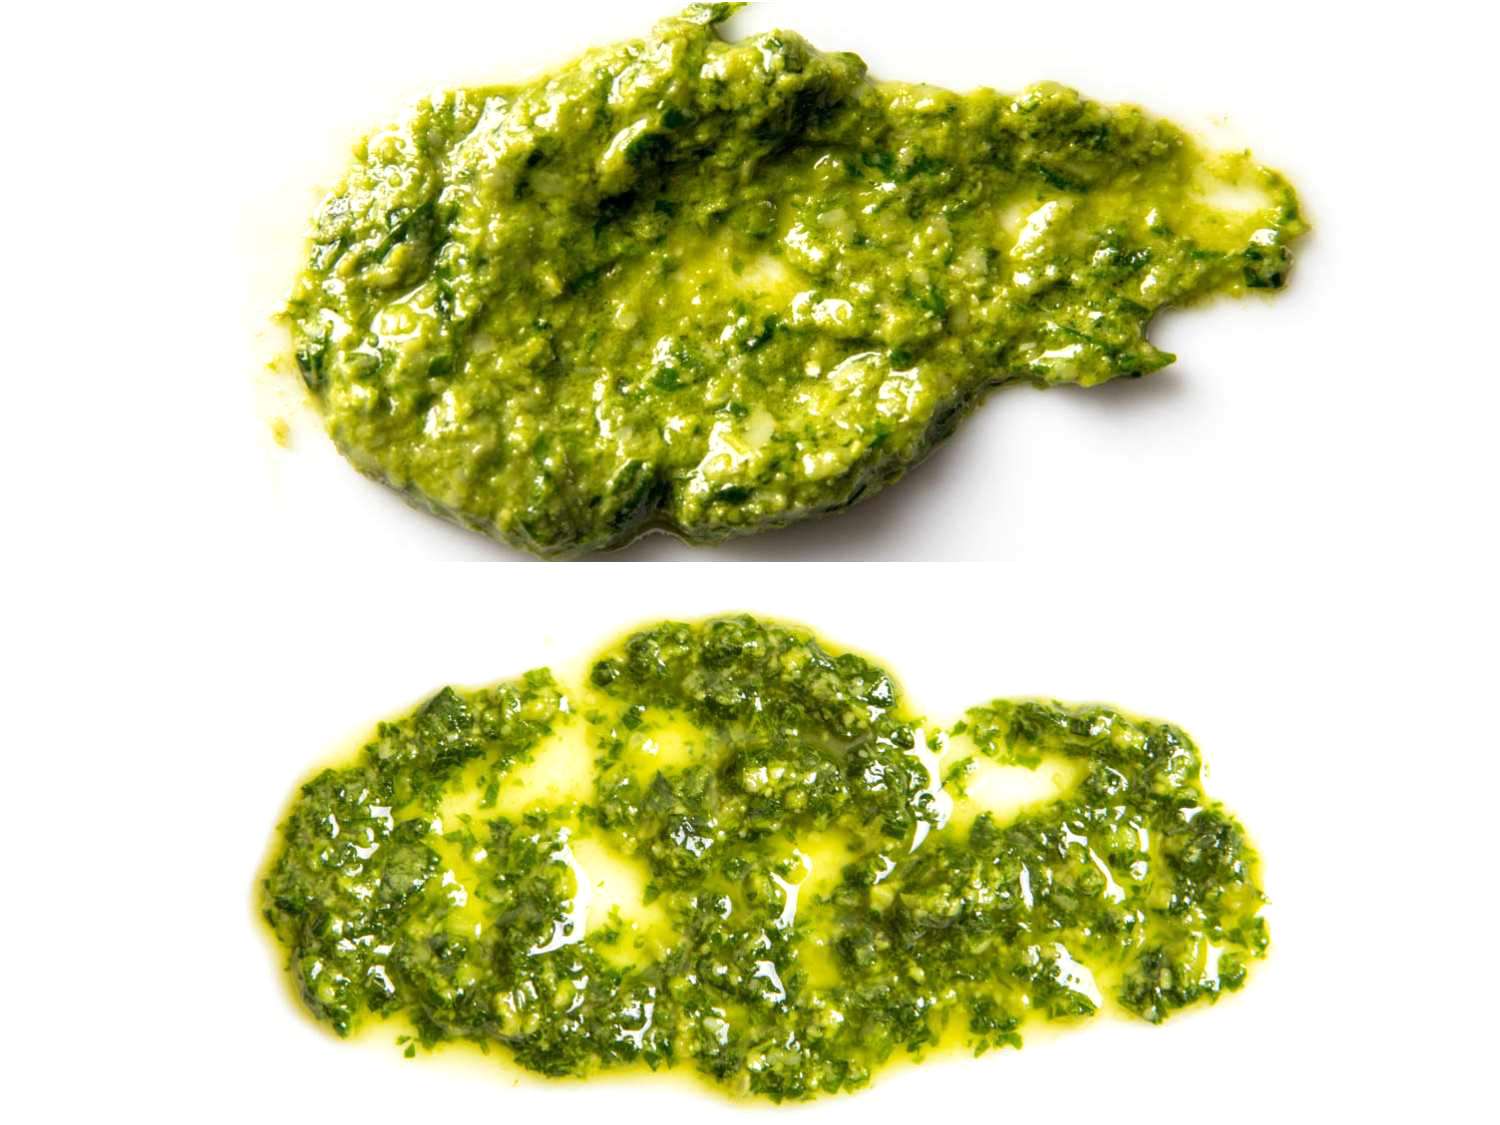 Comparison of pestos: Top, pesto made in mortar and pestle; bottom, pesto made in food processor